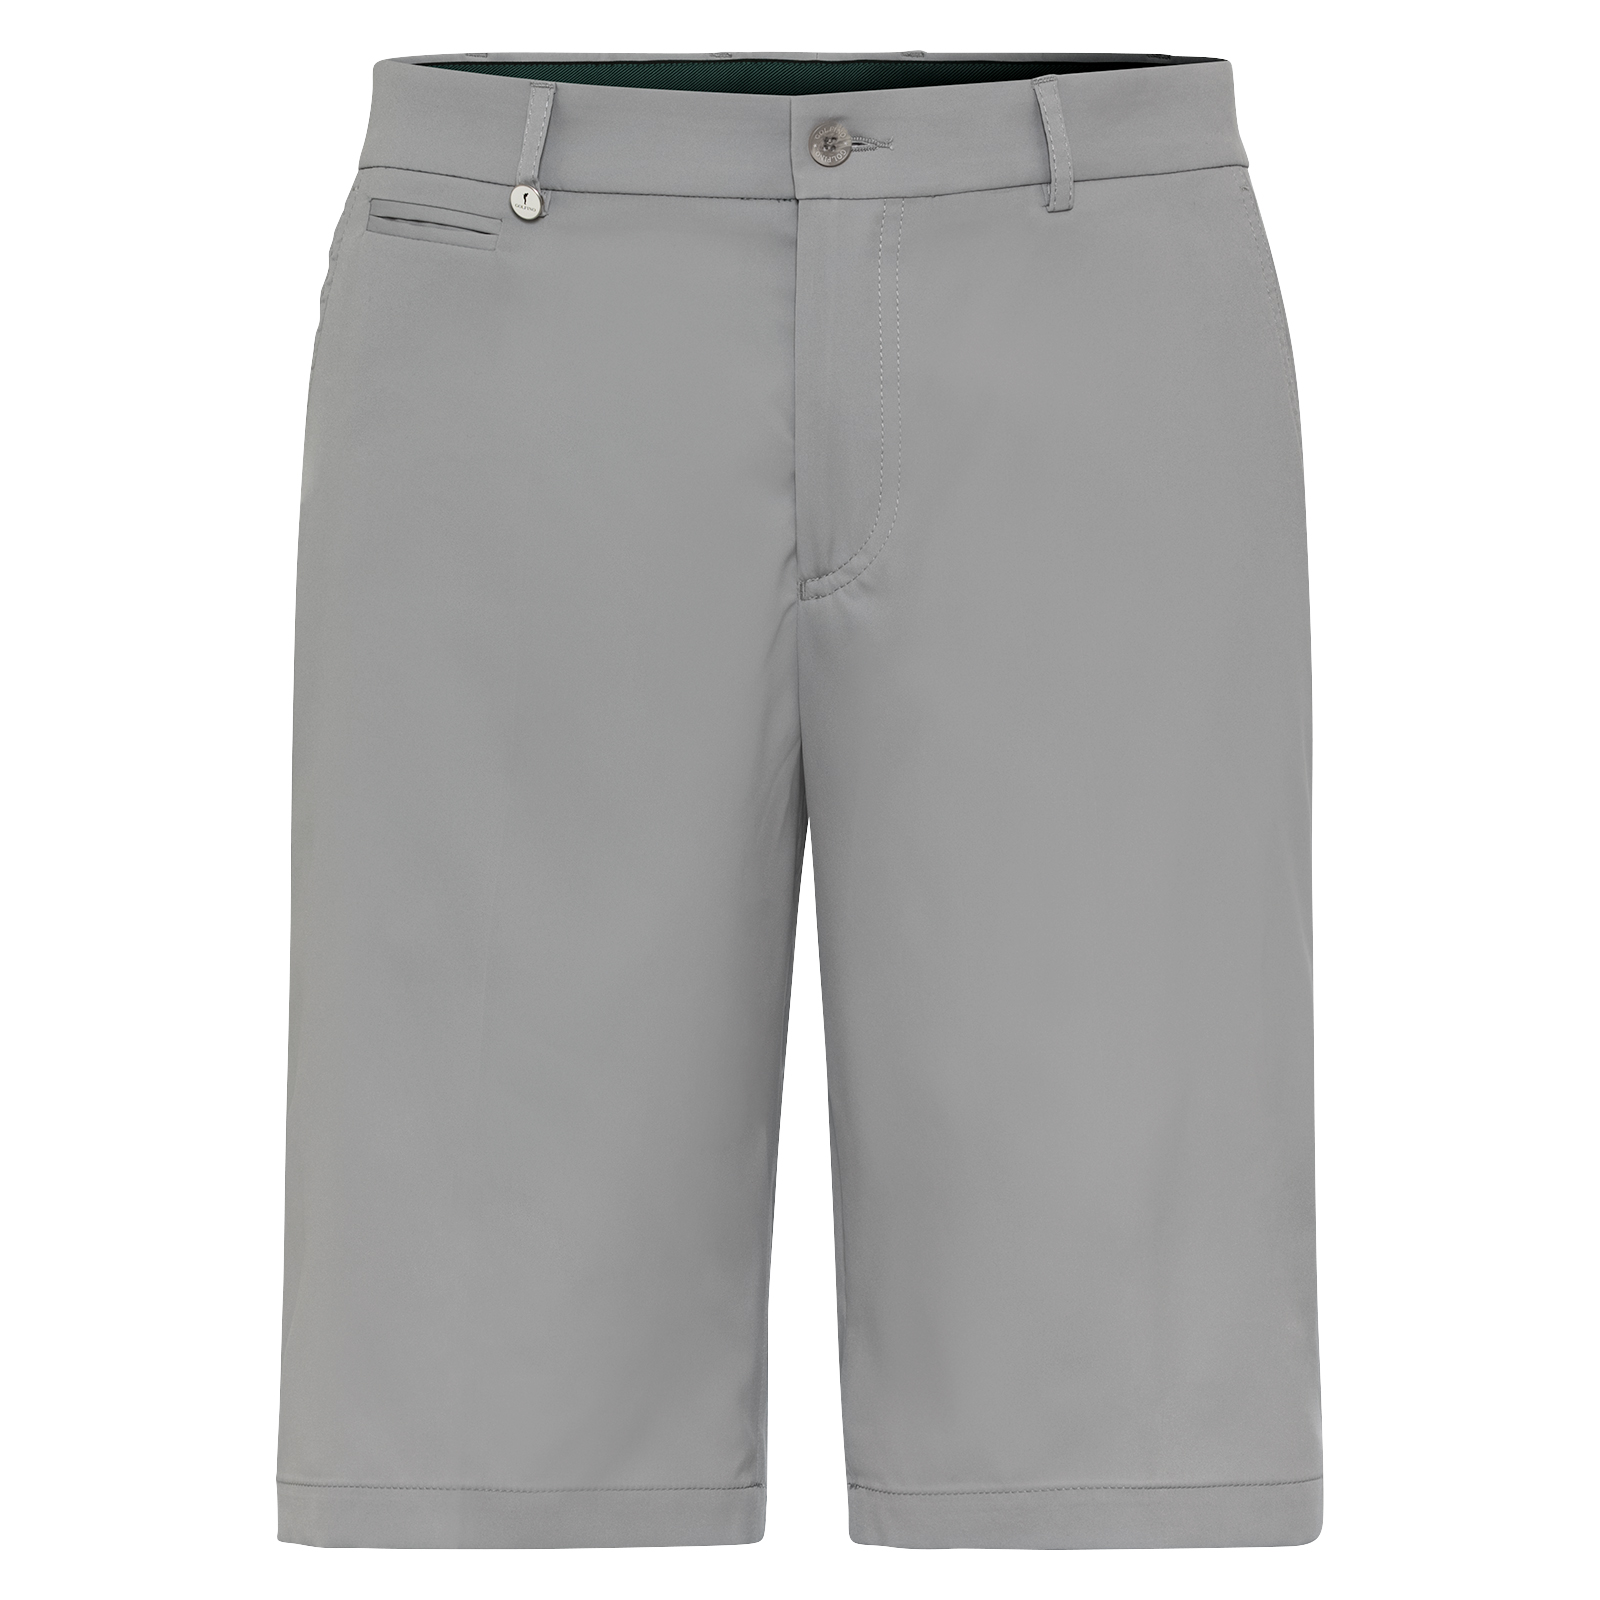 Men's durable, quick dry golf Bermuda shorts 